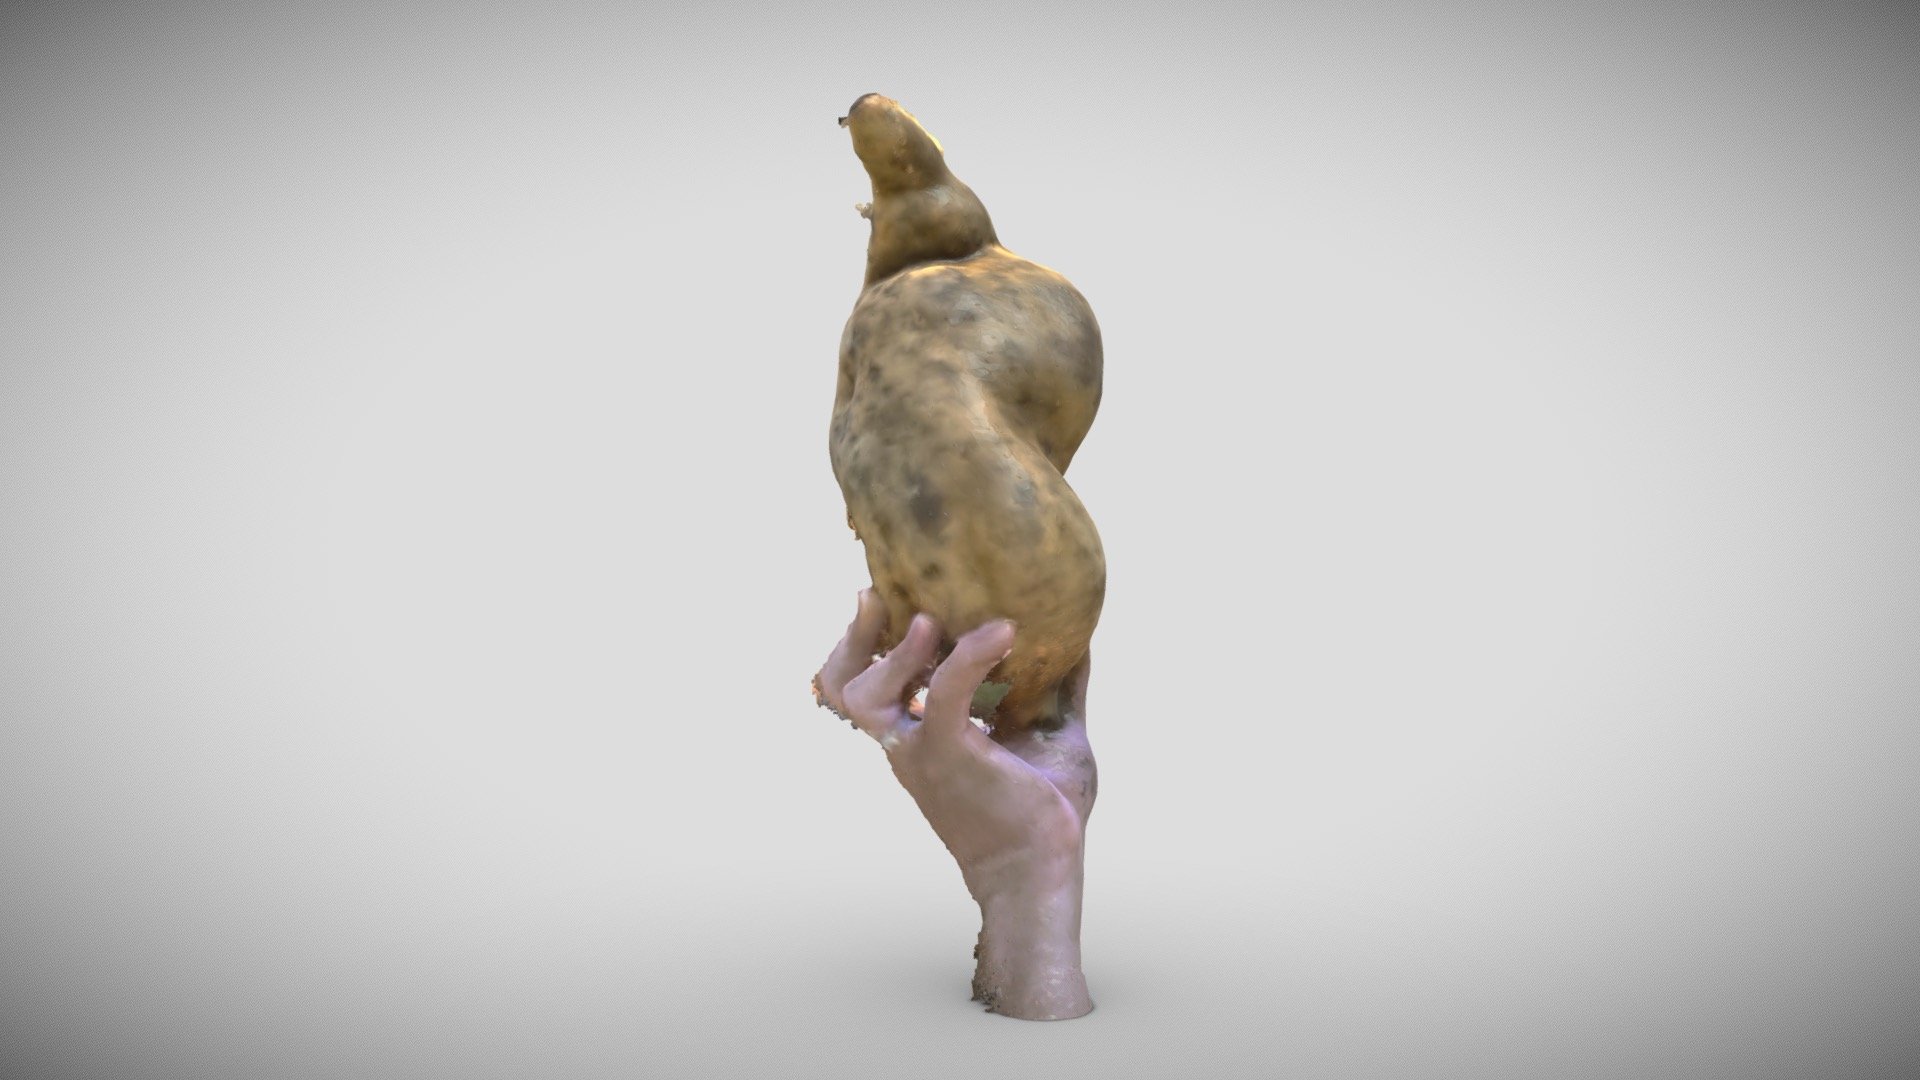 Giant Potato 3d Model By Jimmy Gunawan Jimmygunawan [8da3c83